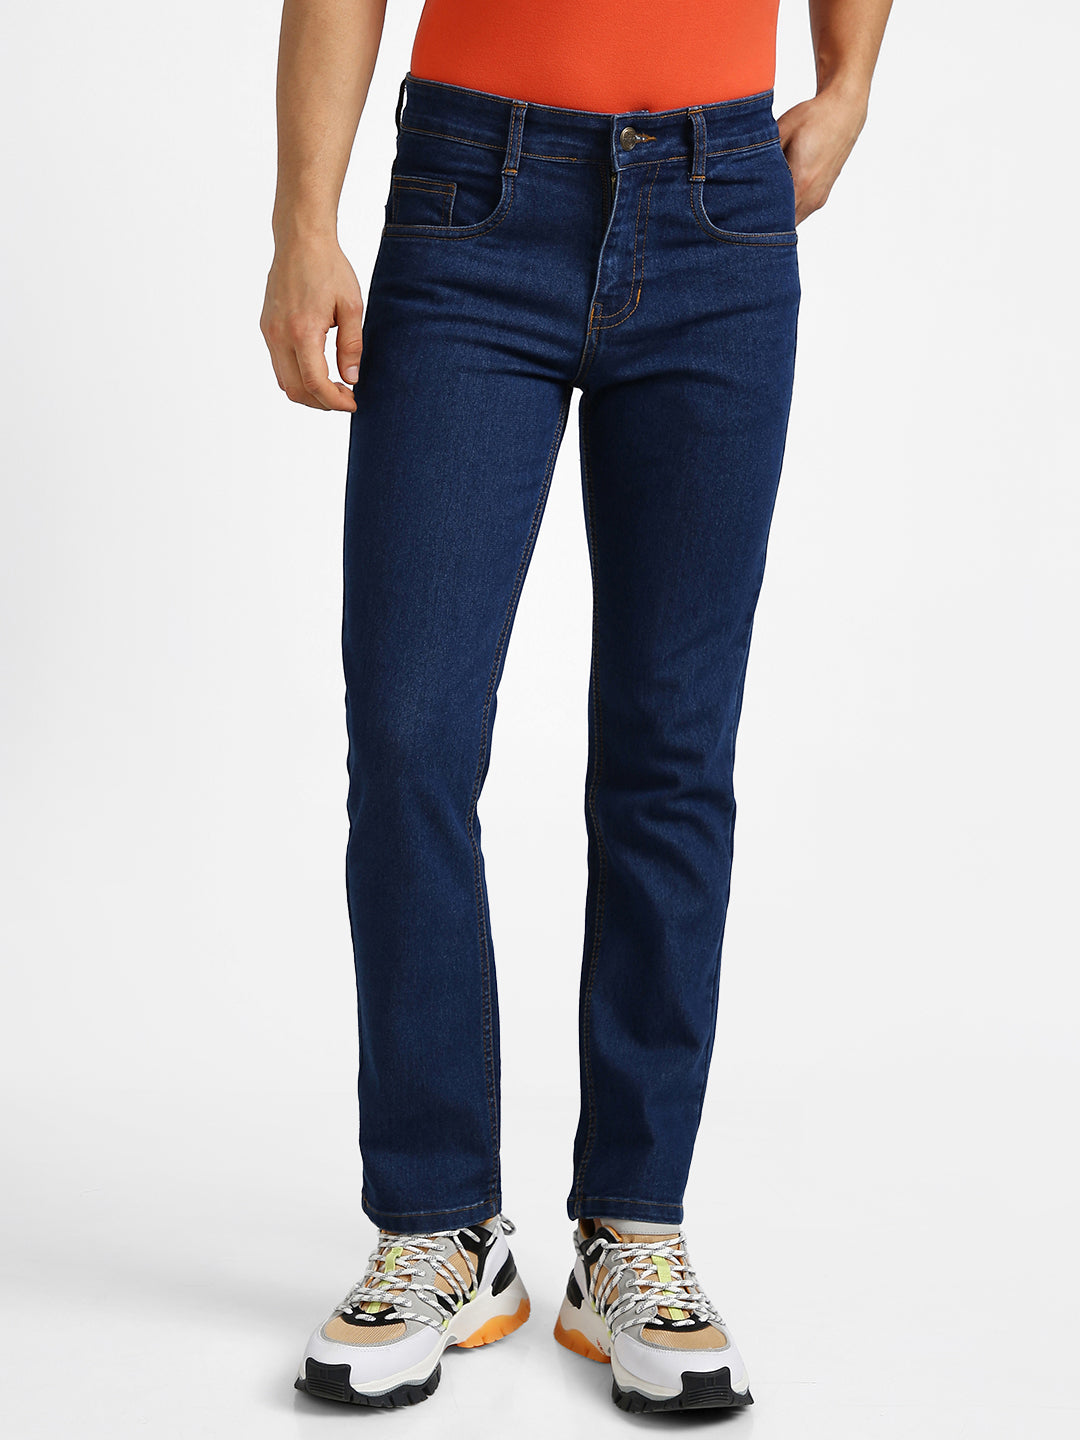 Urbano Fashion Men's Blue Regular Fit Jeans Stretchable